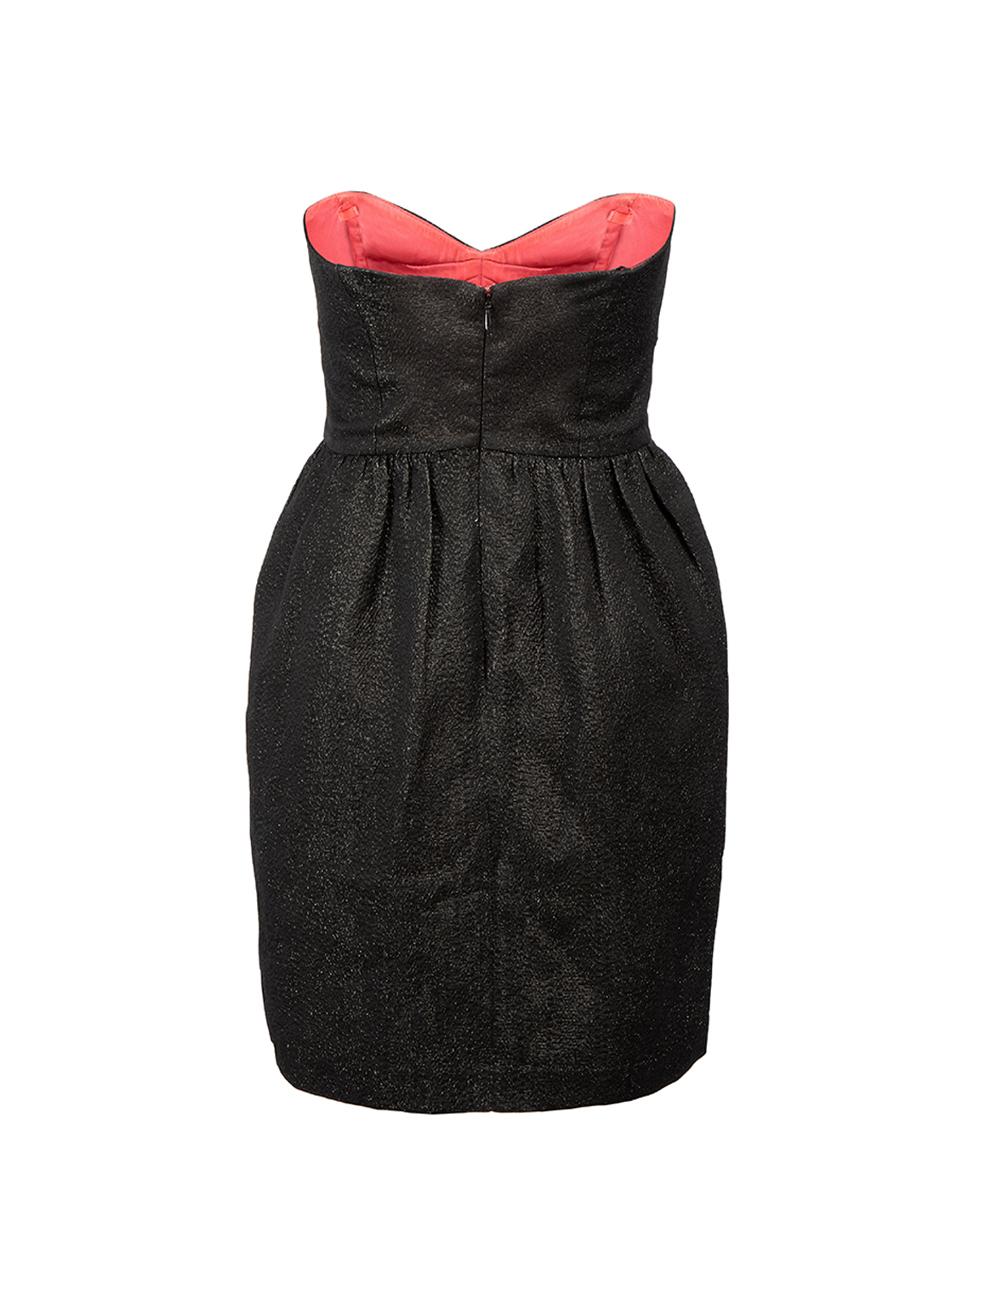 Black Glitter Strapless Mini Dress Size XXS In Good Condition For Sale In London, GB